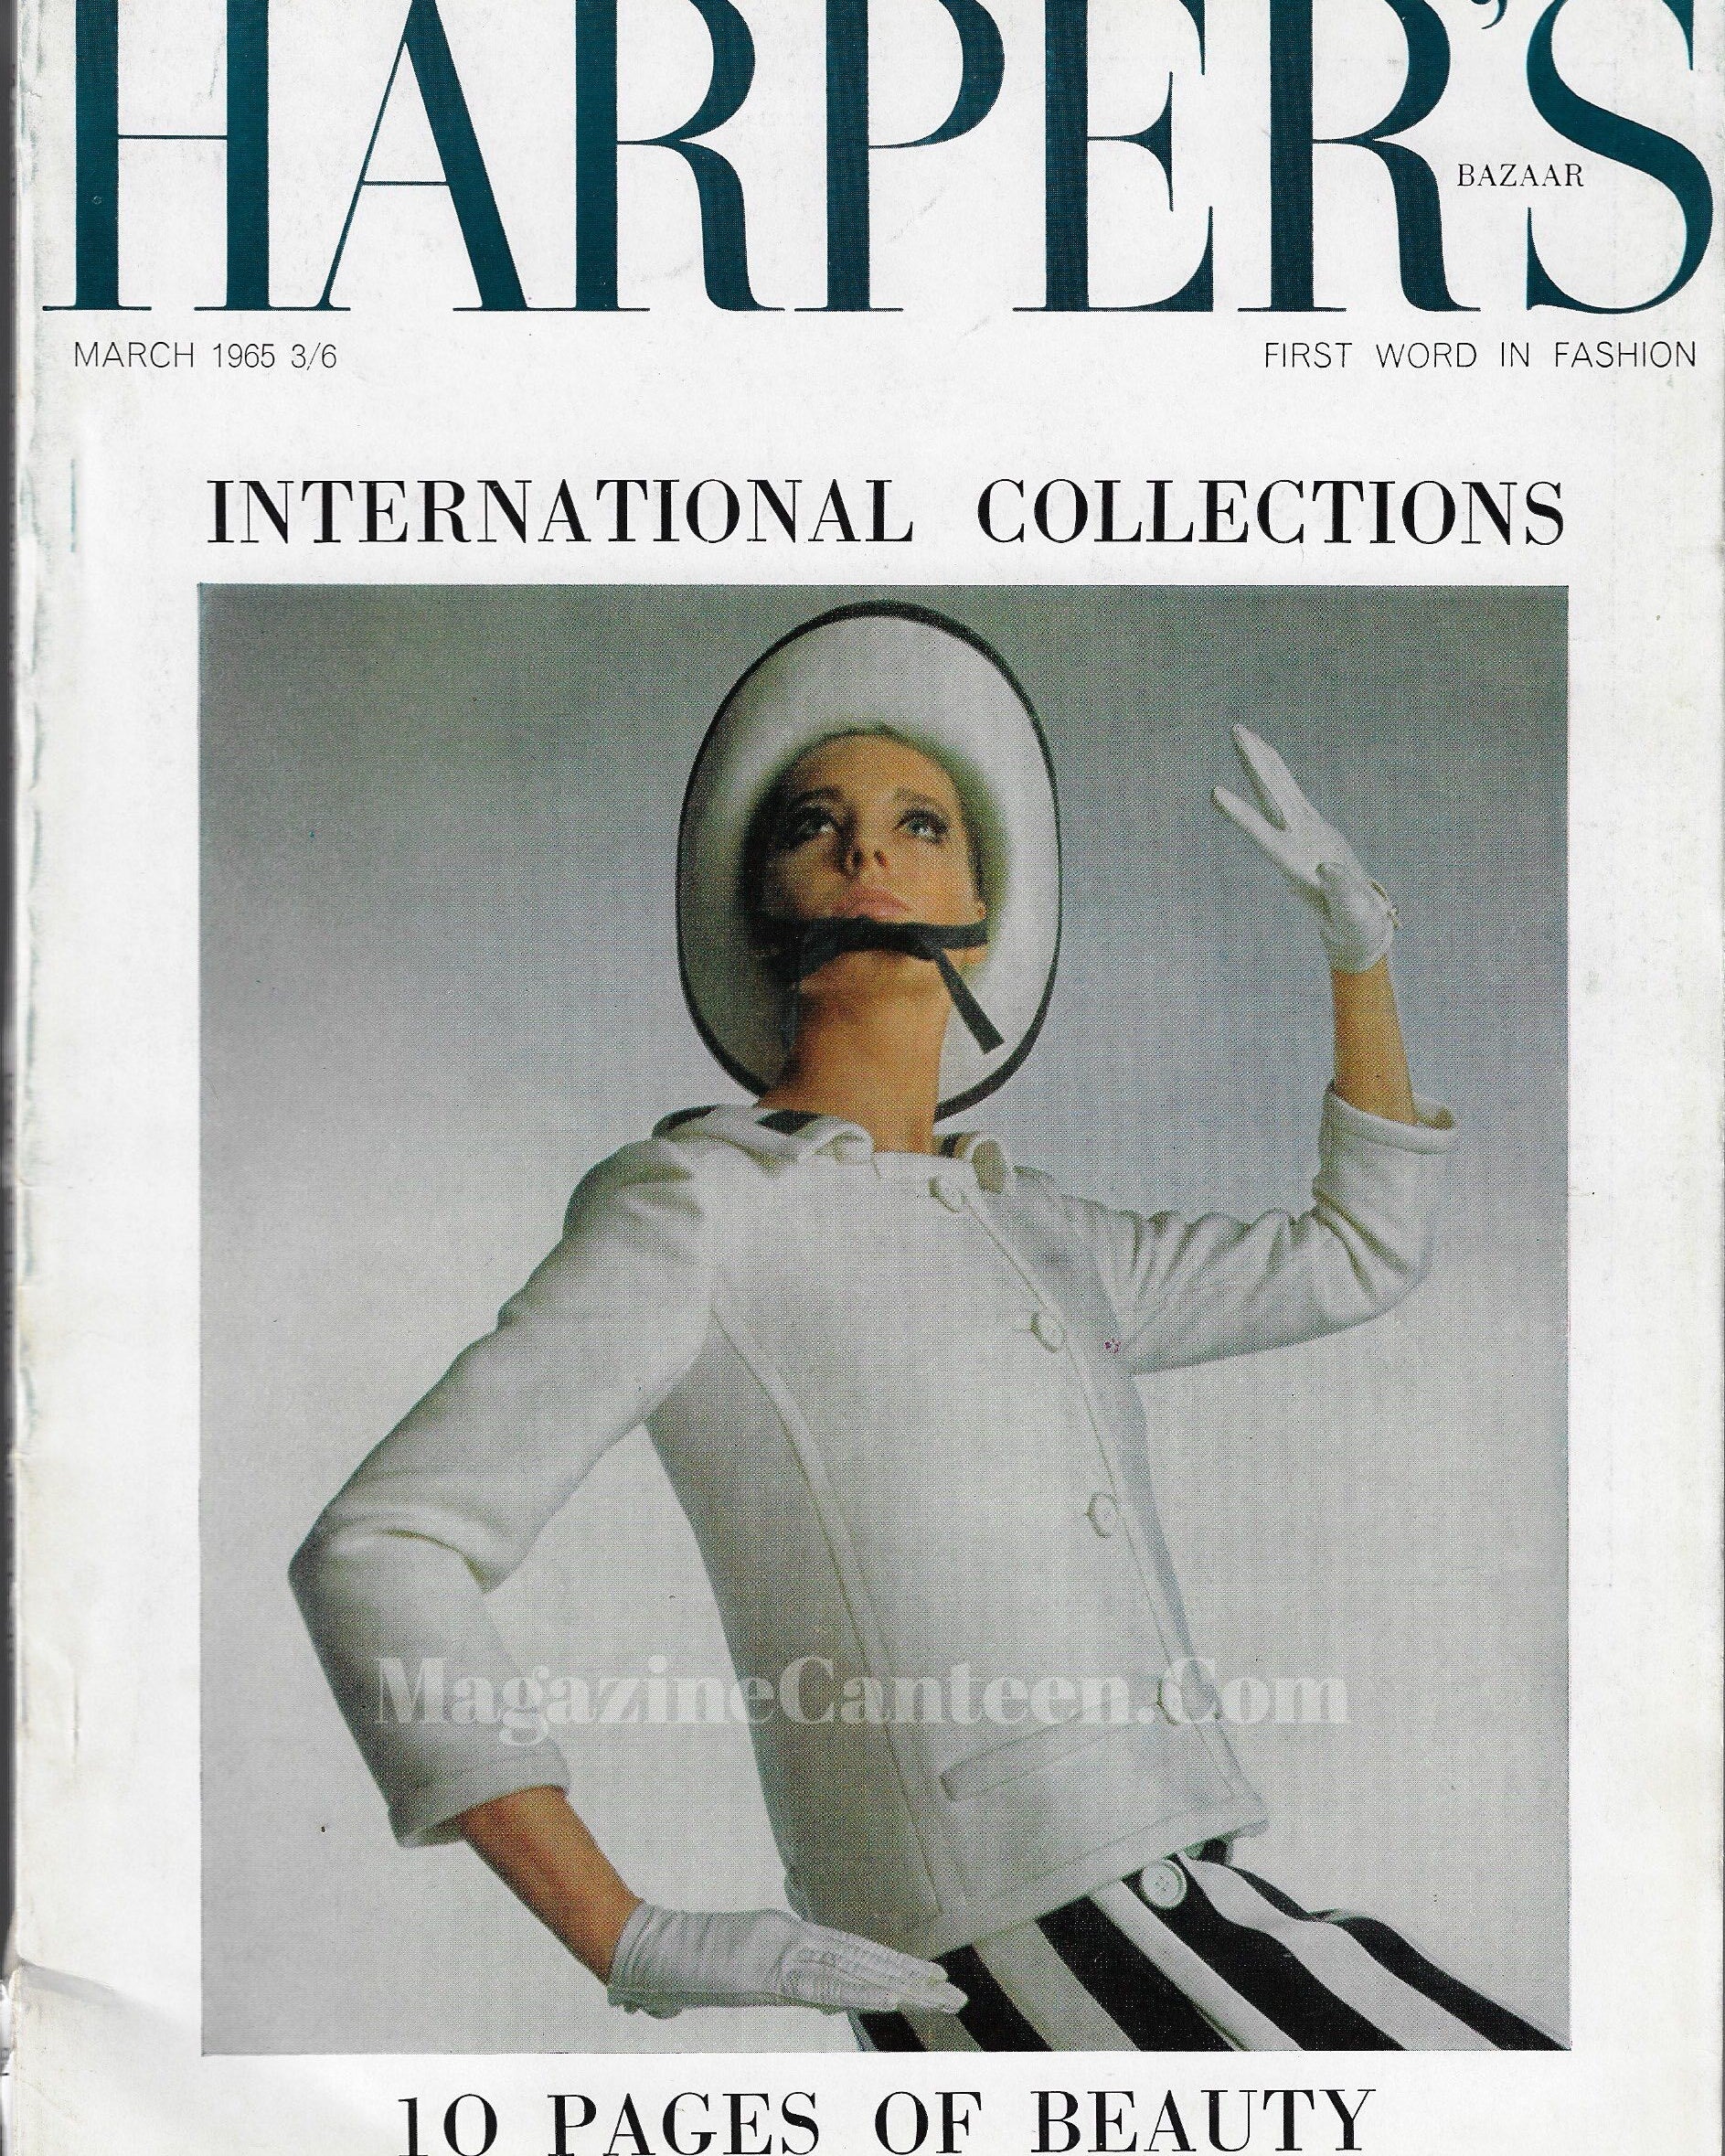  1Harpers Bazaar Magazine - David Montgomery 1965 March